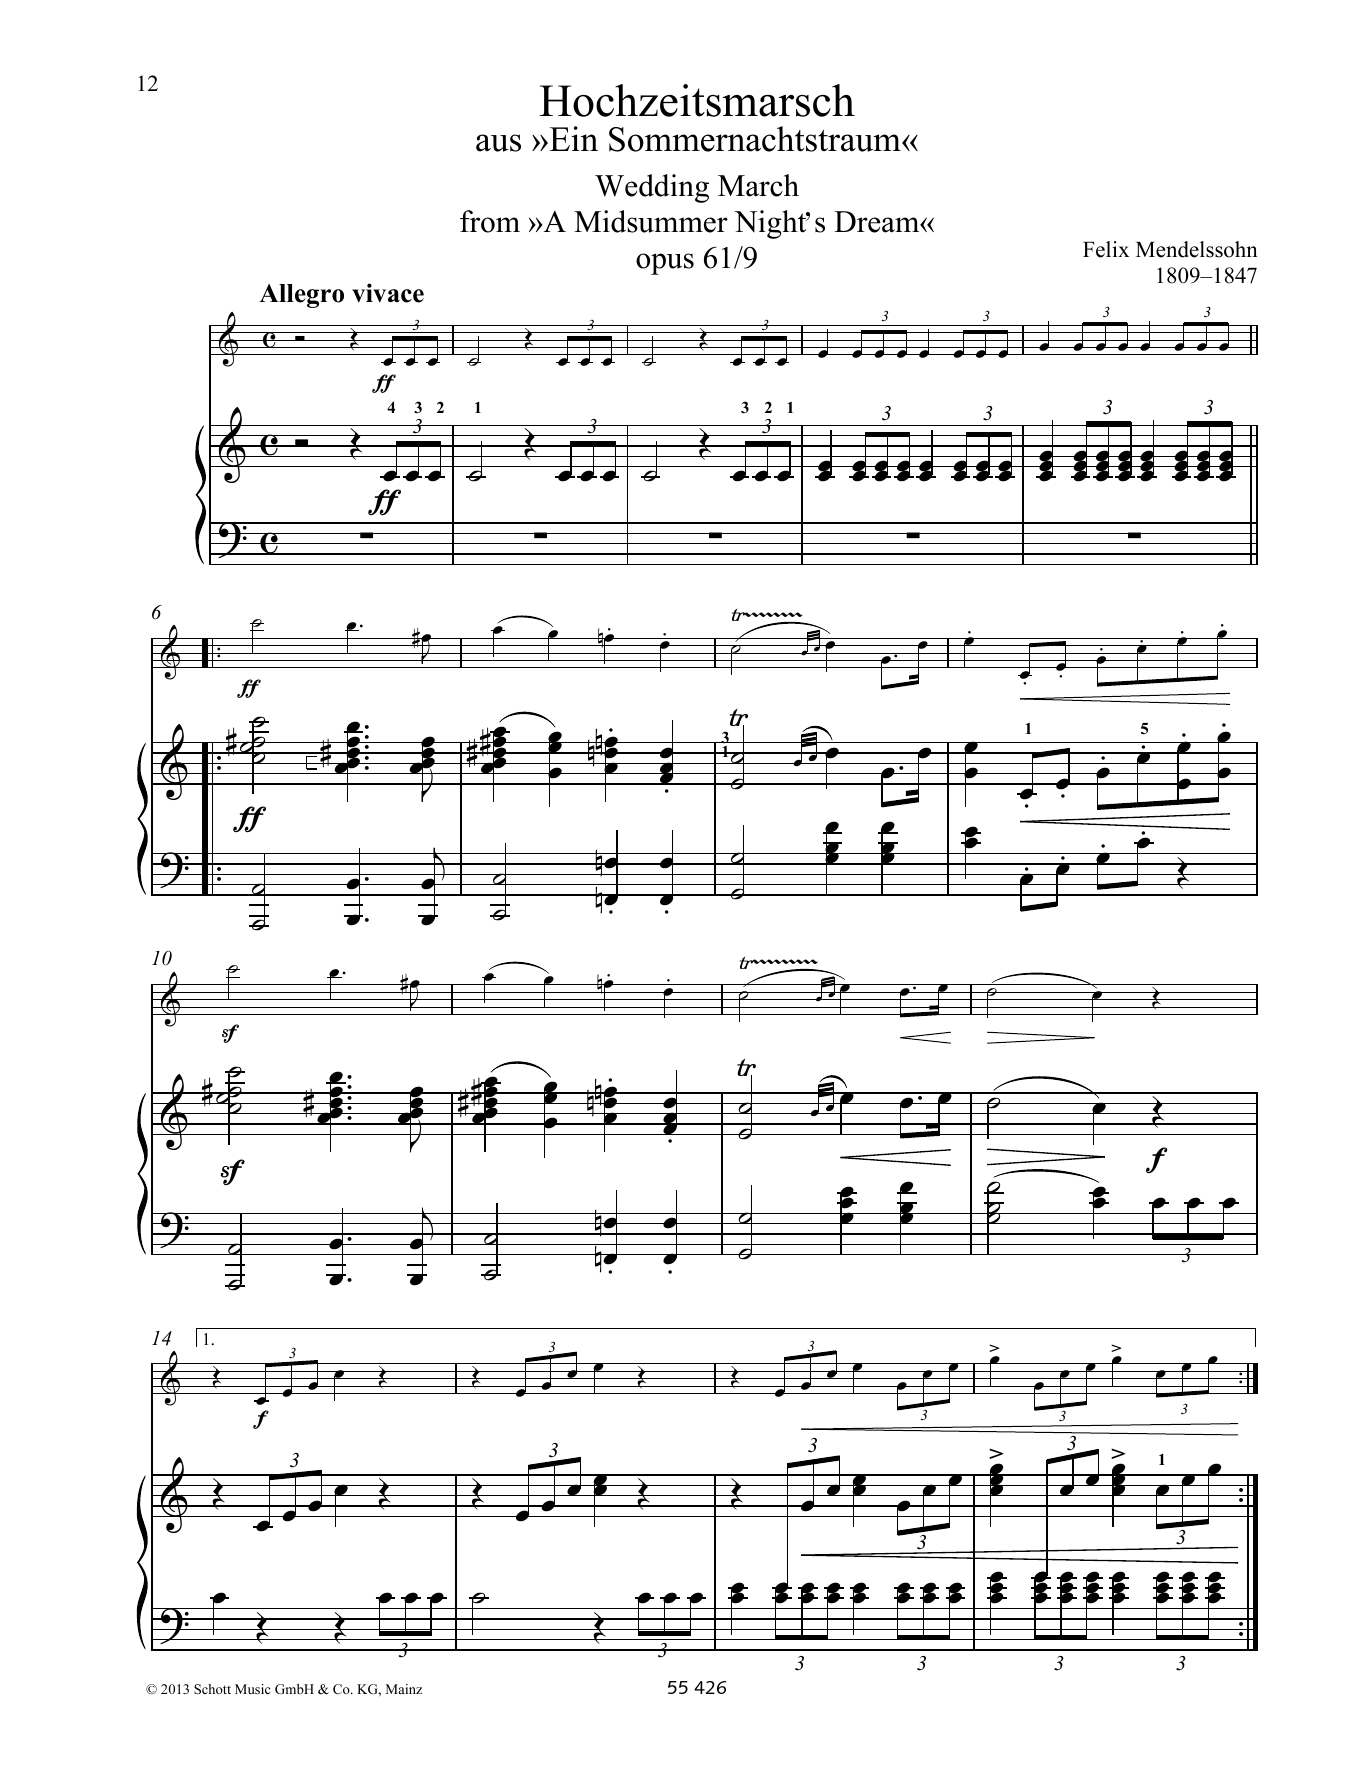 Felix Mendelssohn Bartholdy Wedding March Sheet Music Notes & Chords for Brass Solo - Download or Print PDF